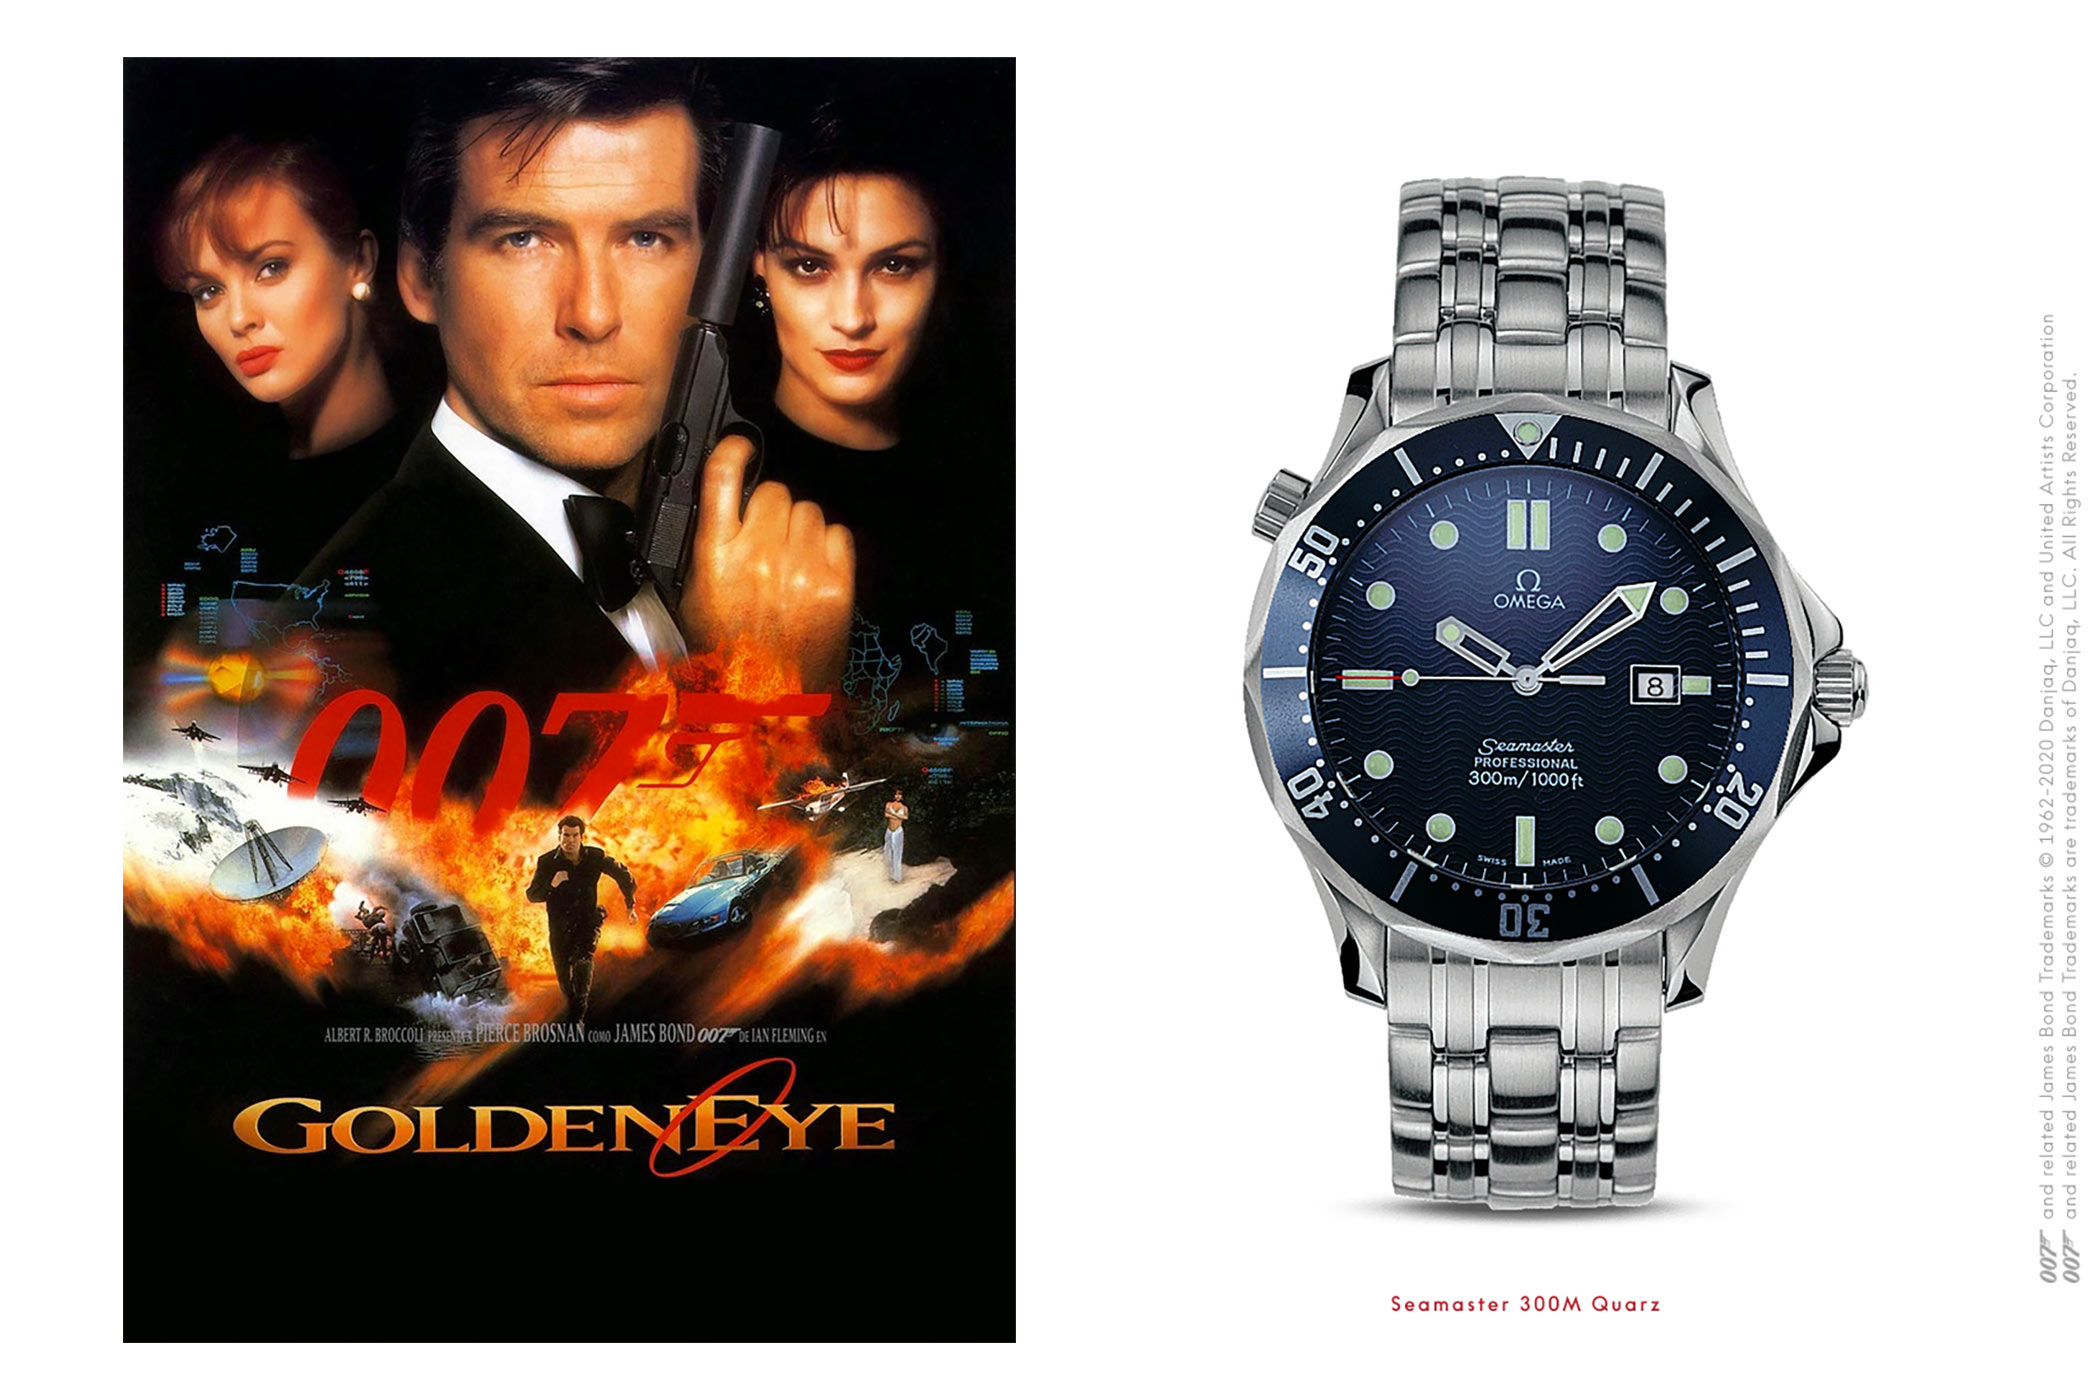 James Bond 007 - Goldeneye (Special Edition)